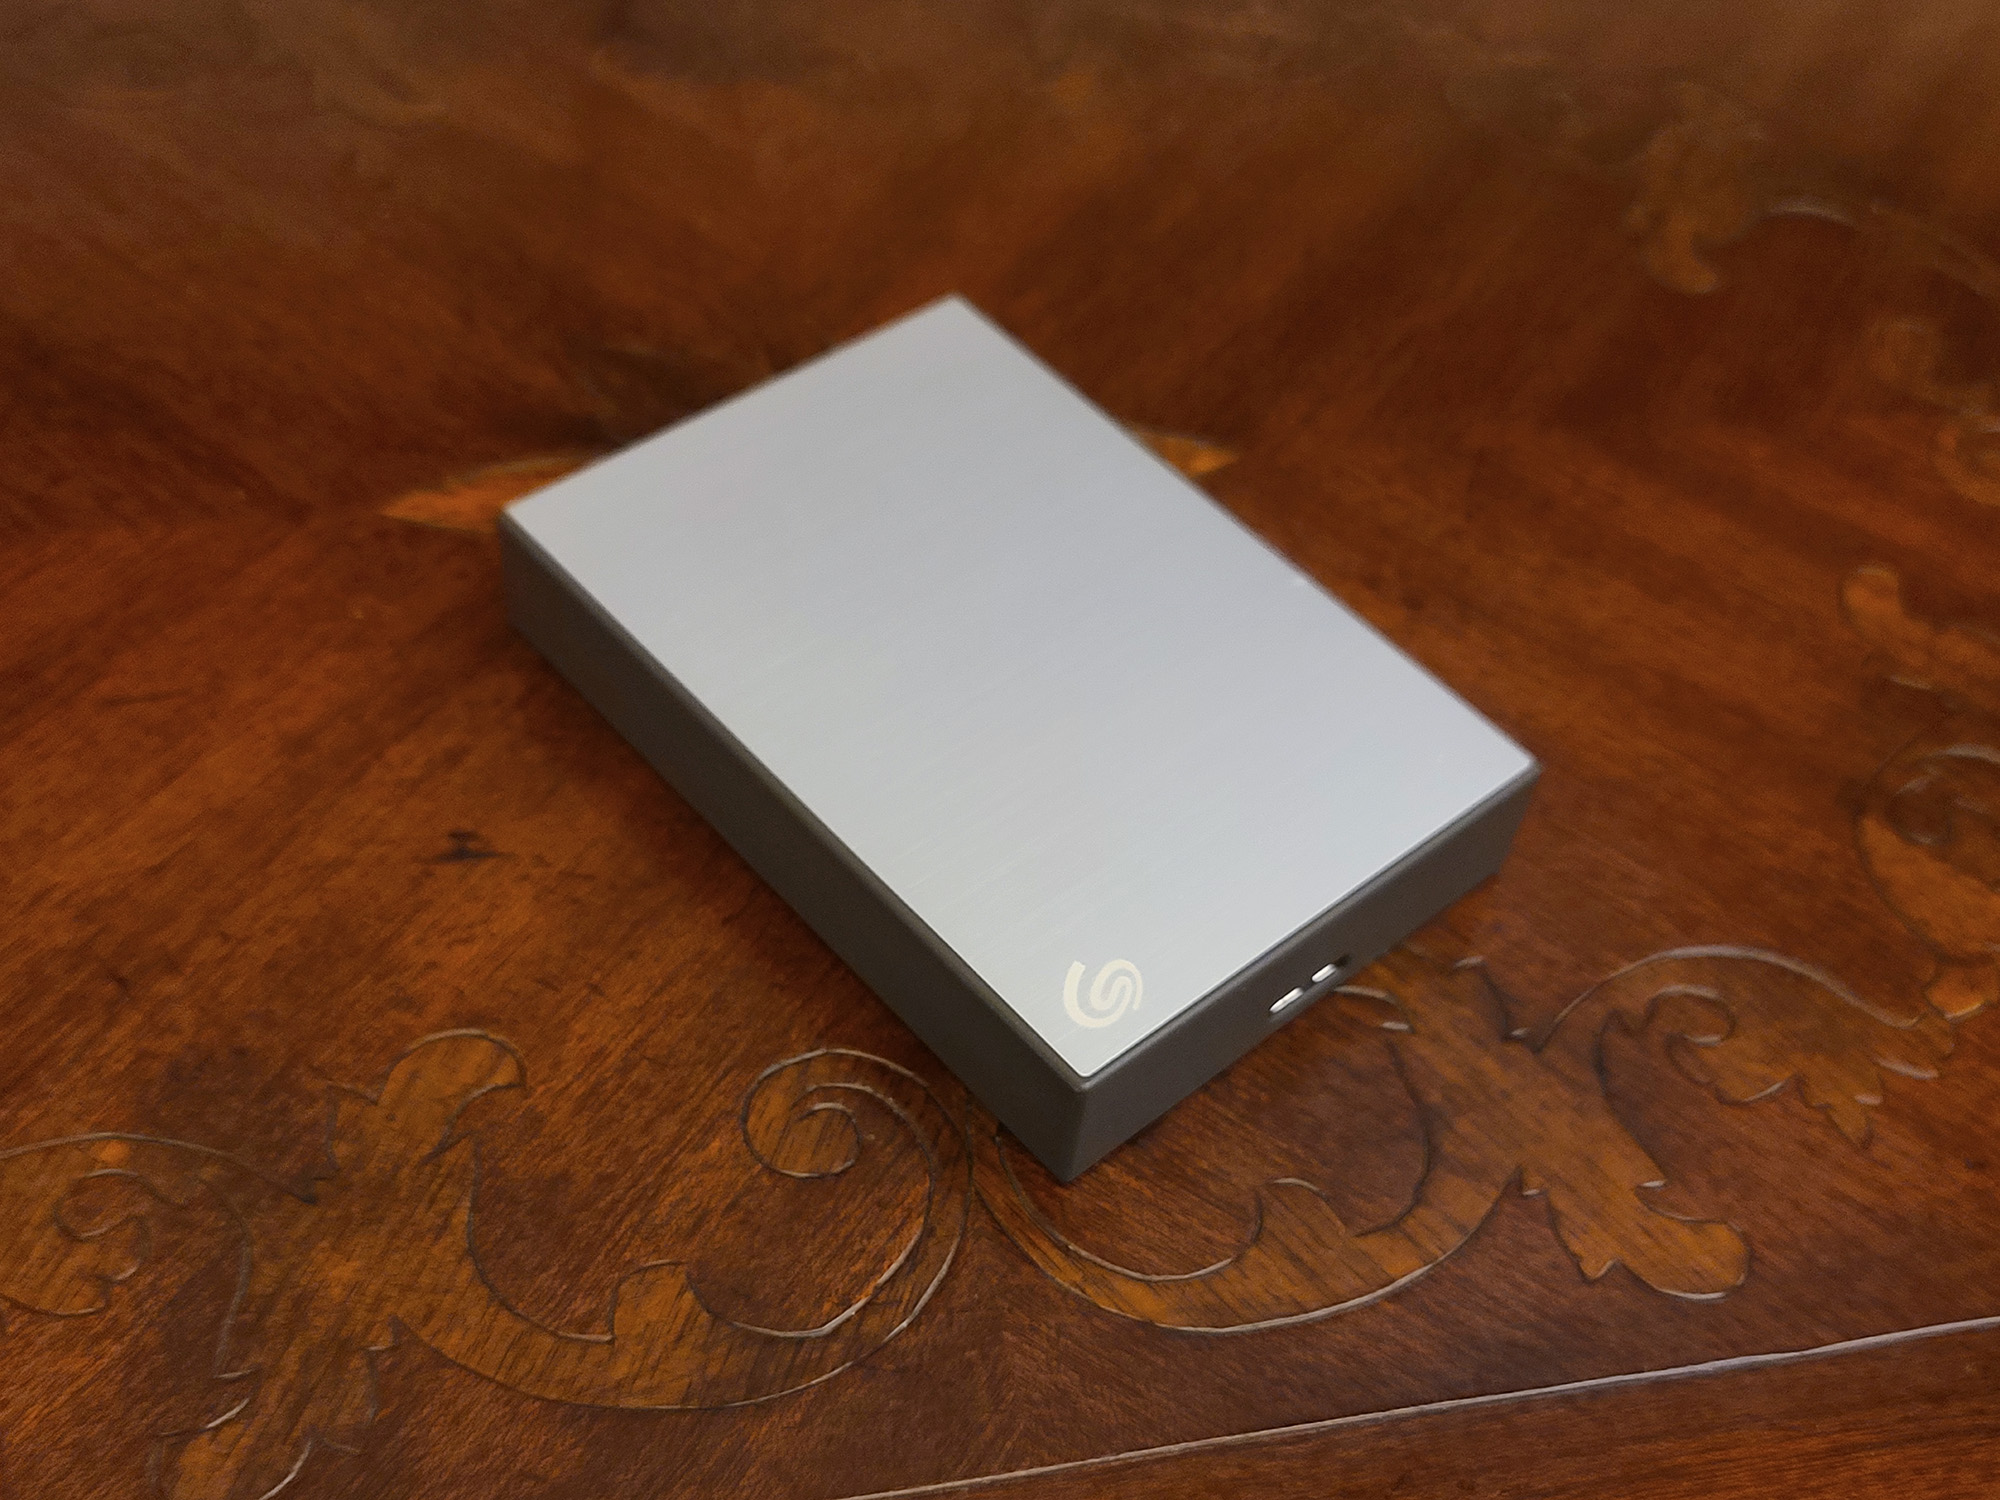 Best external hard drives: Seagate Backup Plus Portable (4TB)